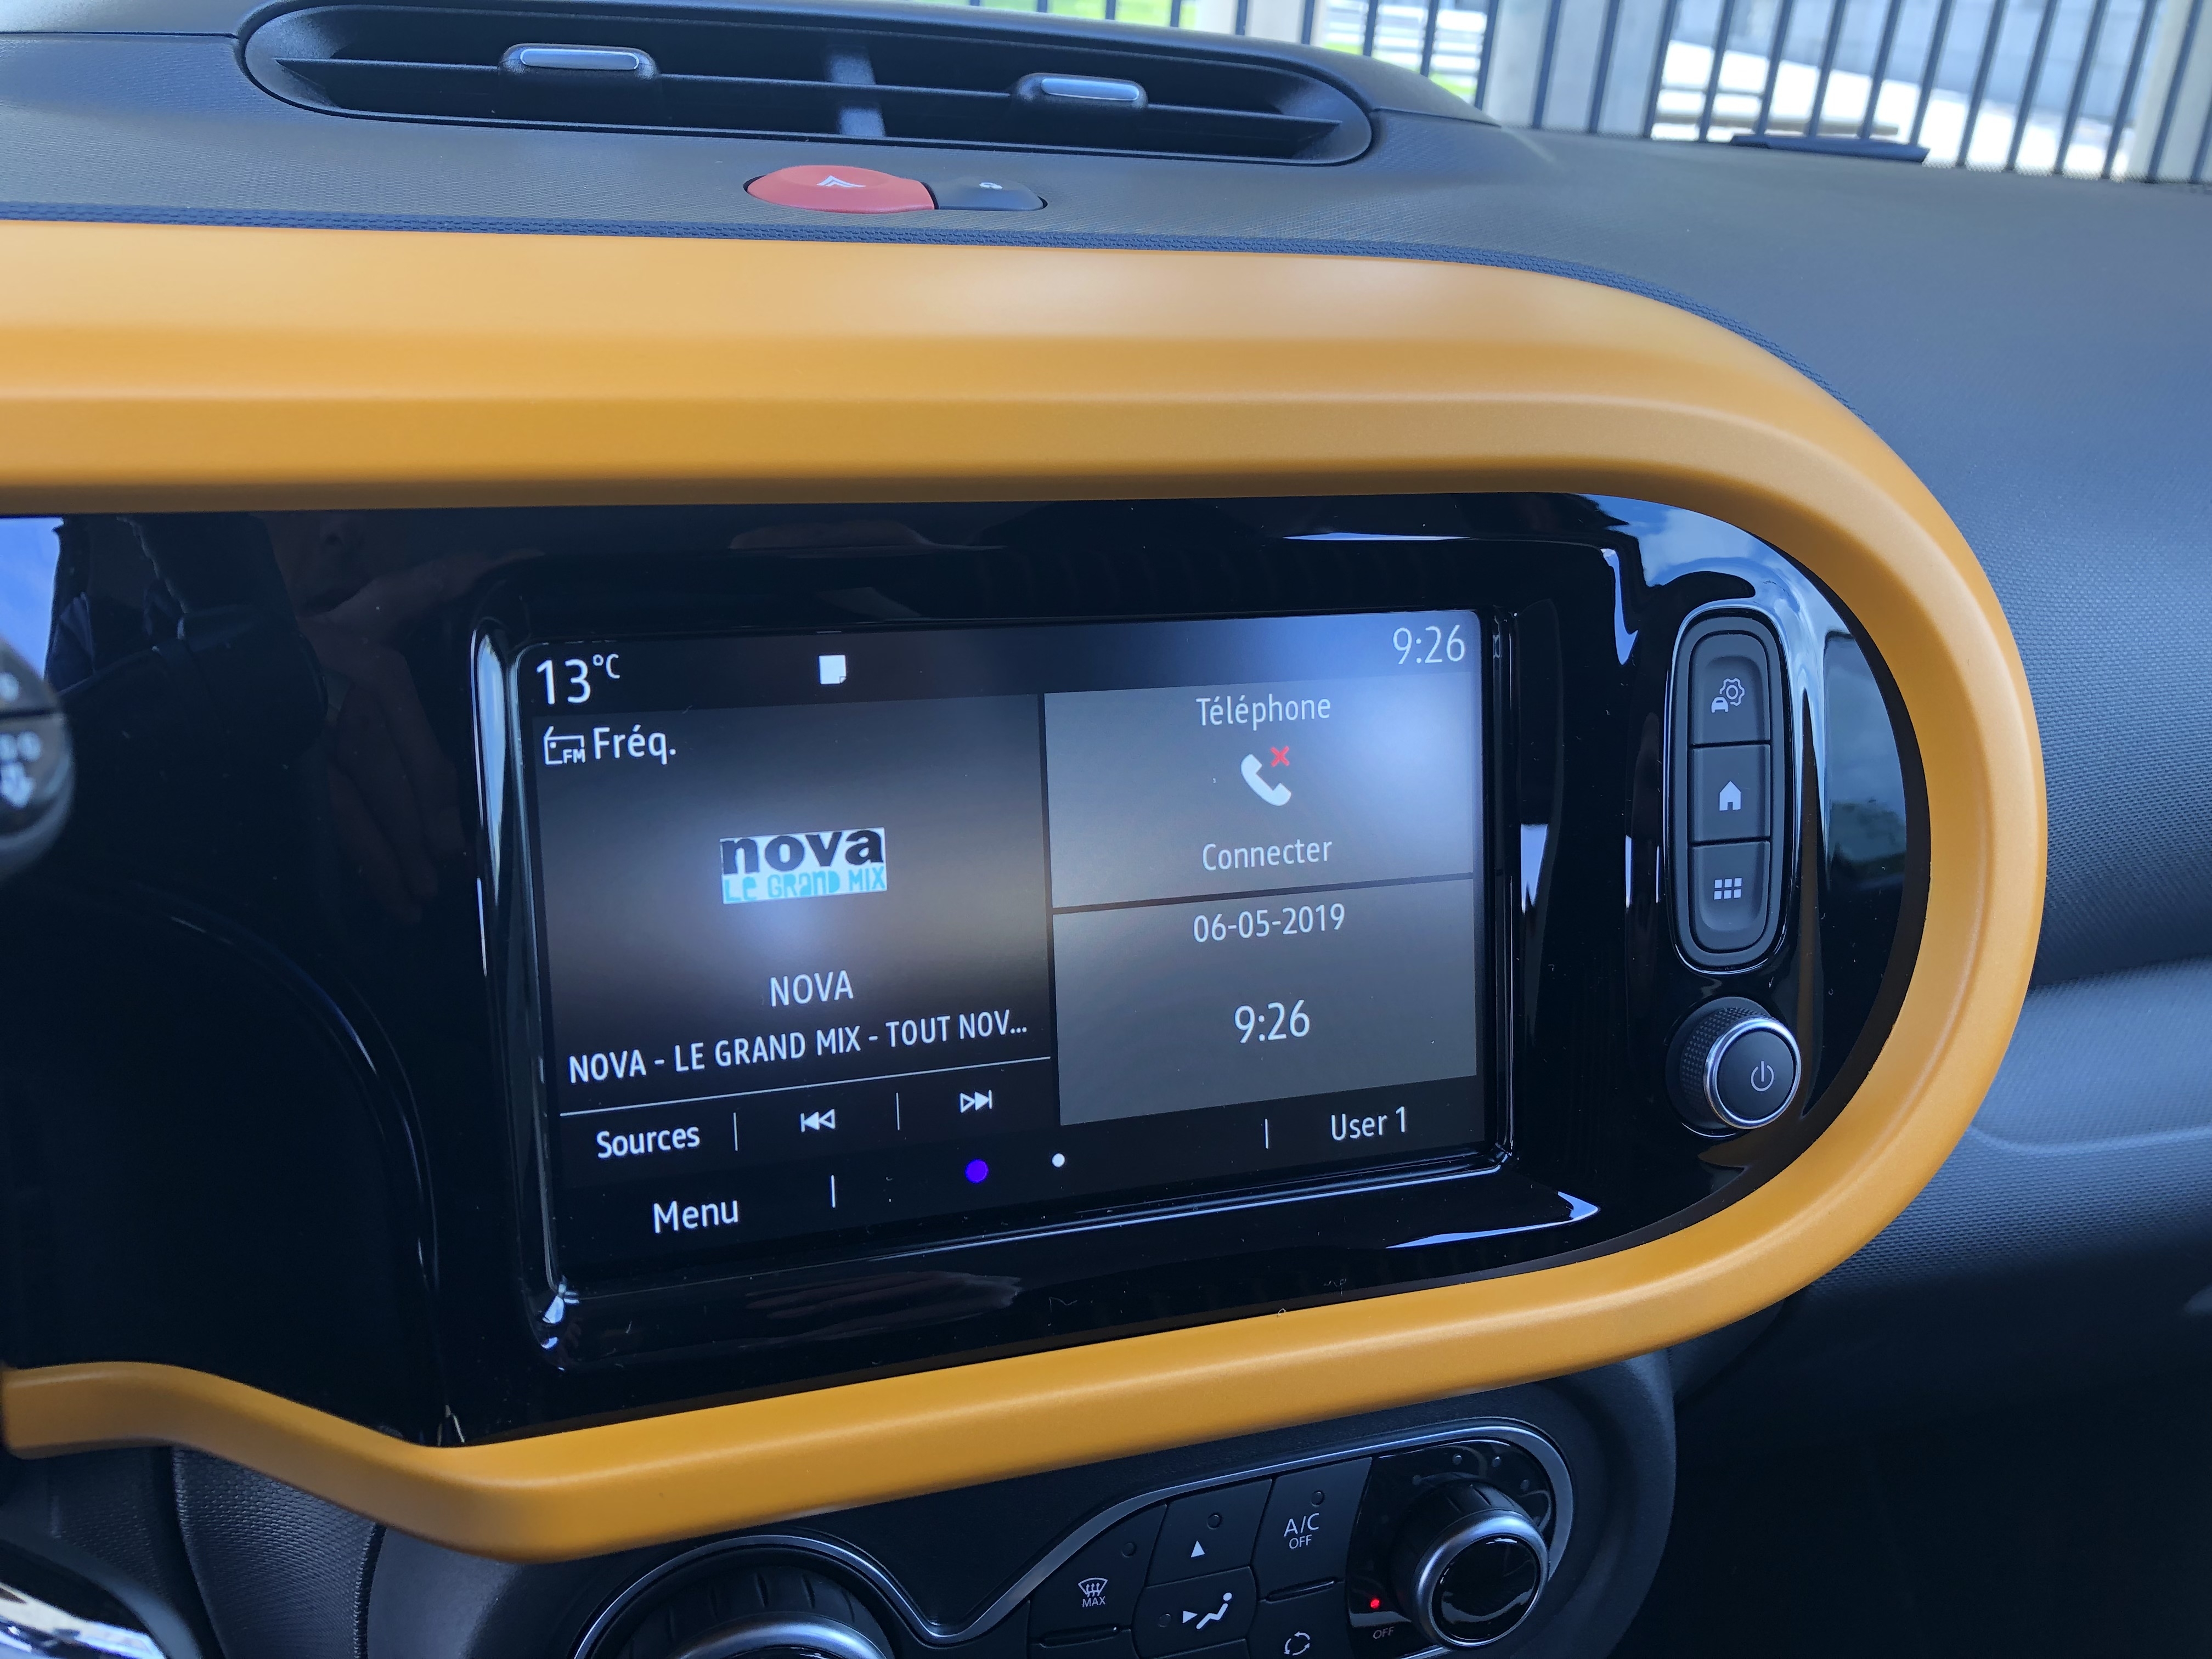 Renault Twingo interior specifications